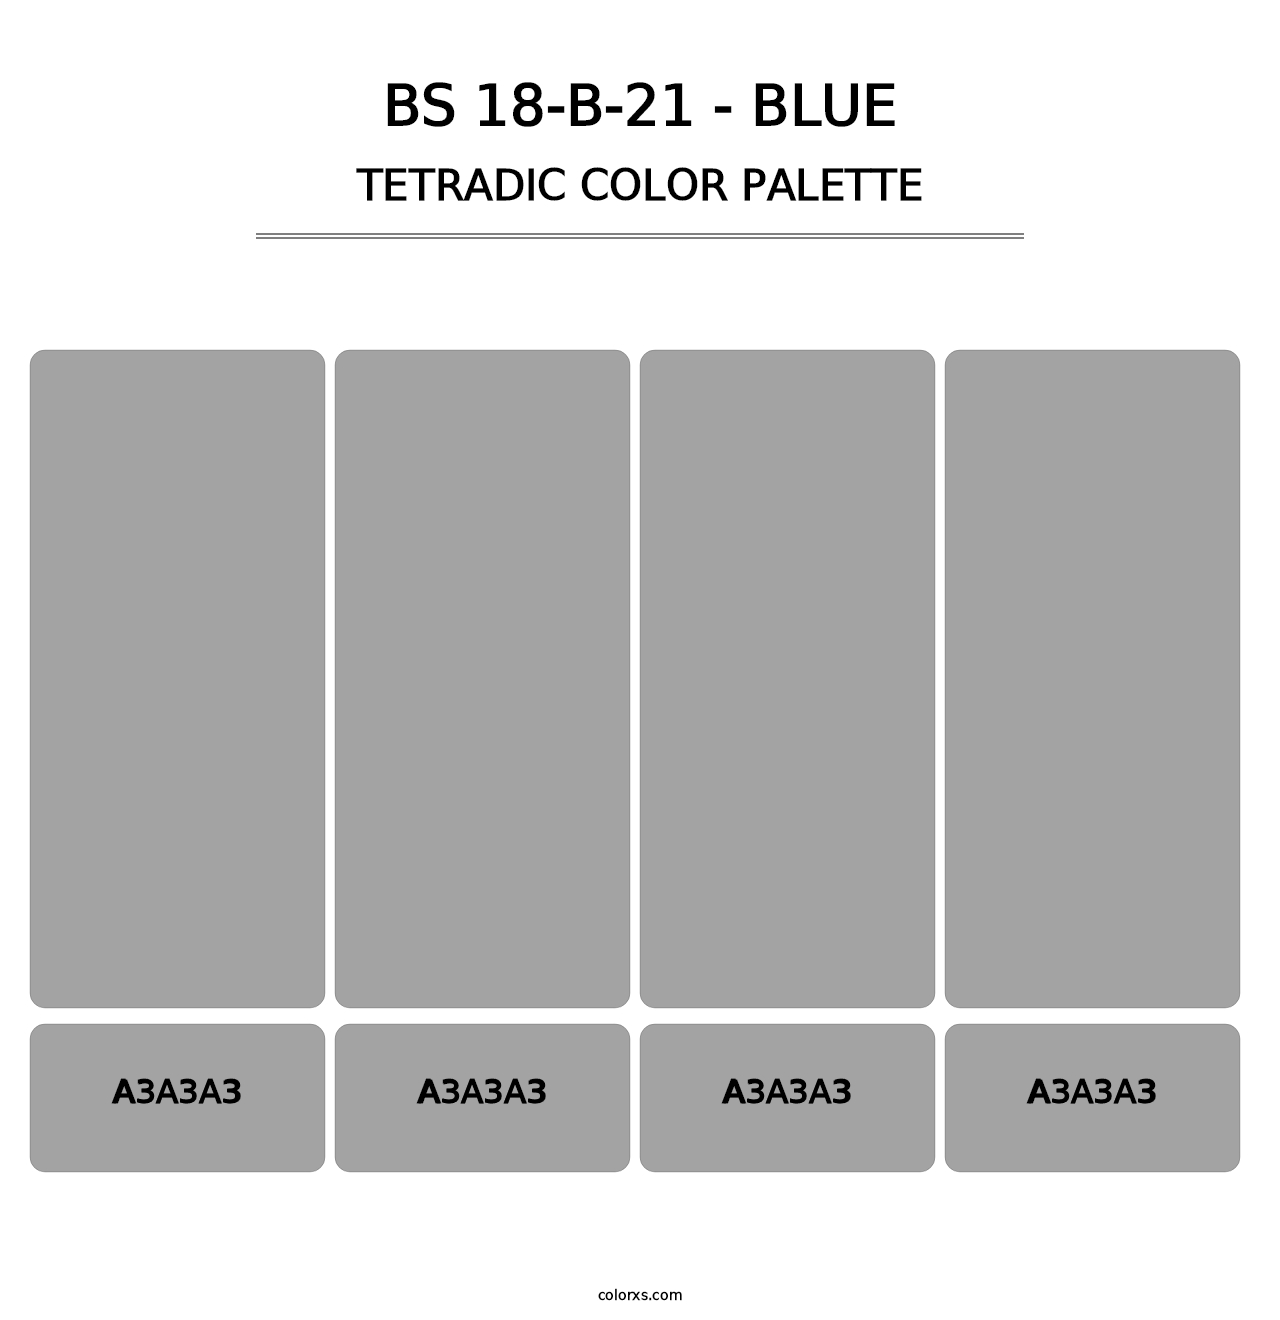 BS 18-B-21 - Blue - Tetradic Color Palette